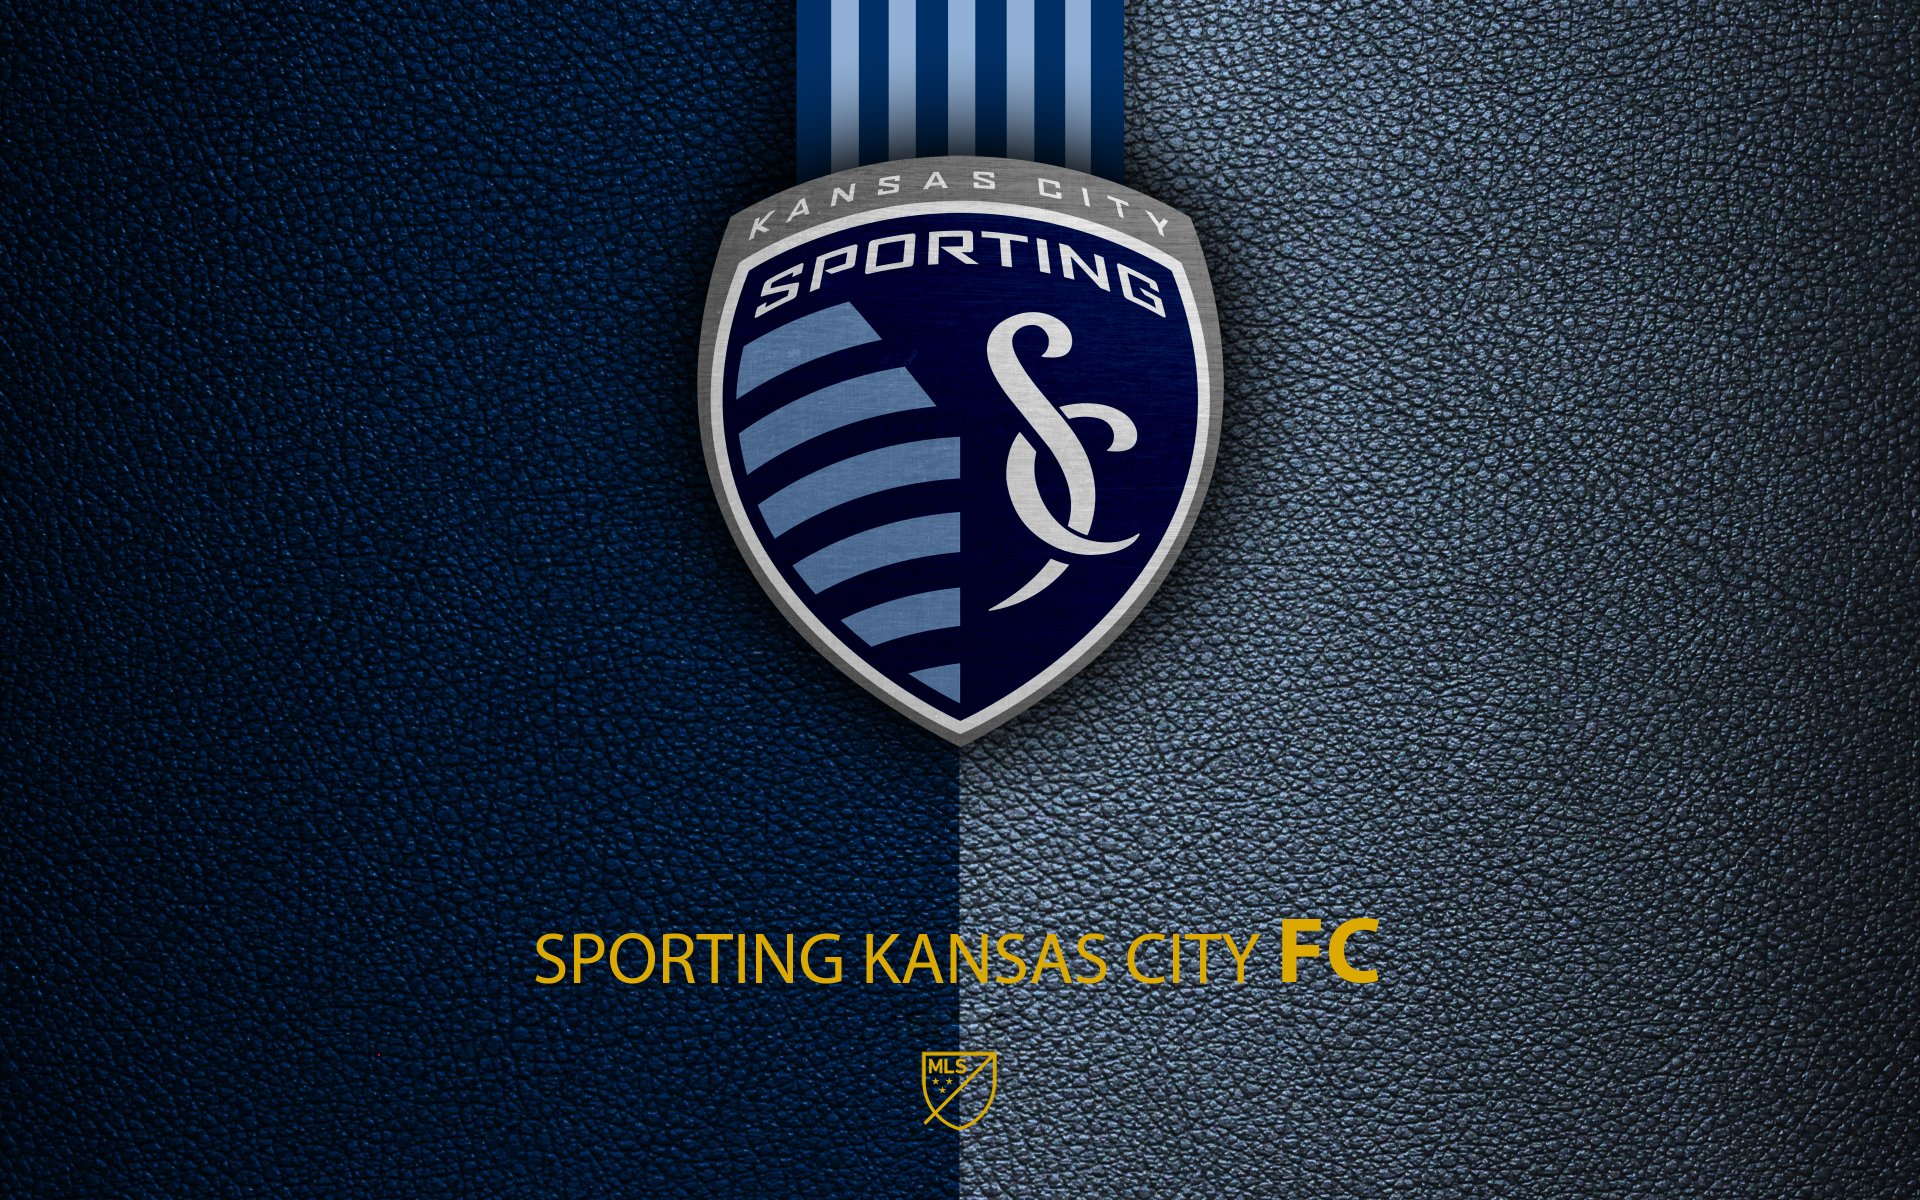 Sporting Kansas City 4k Ultra HD Wallpaper Background Image